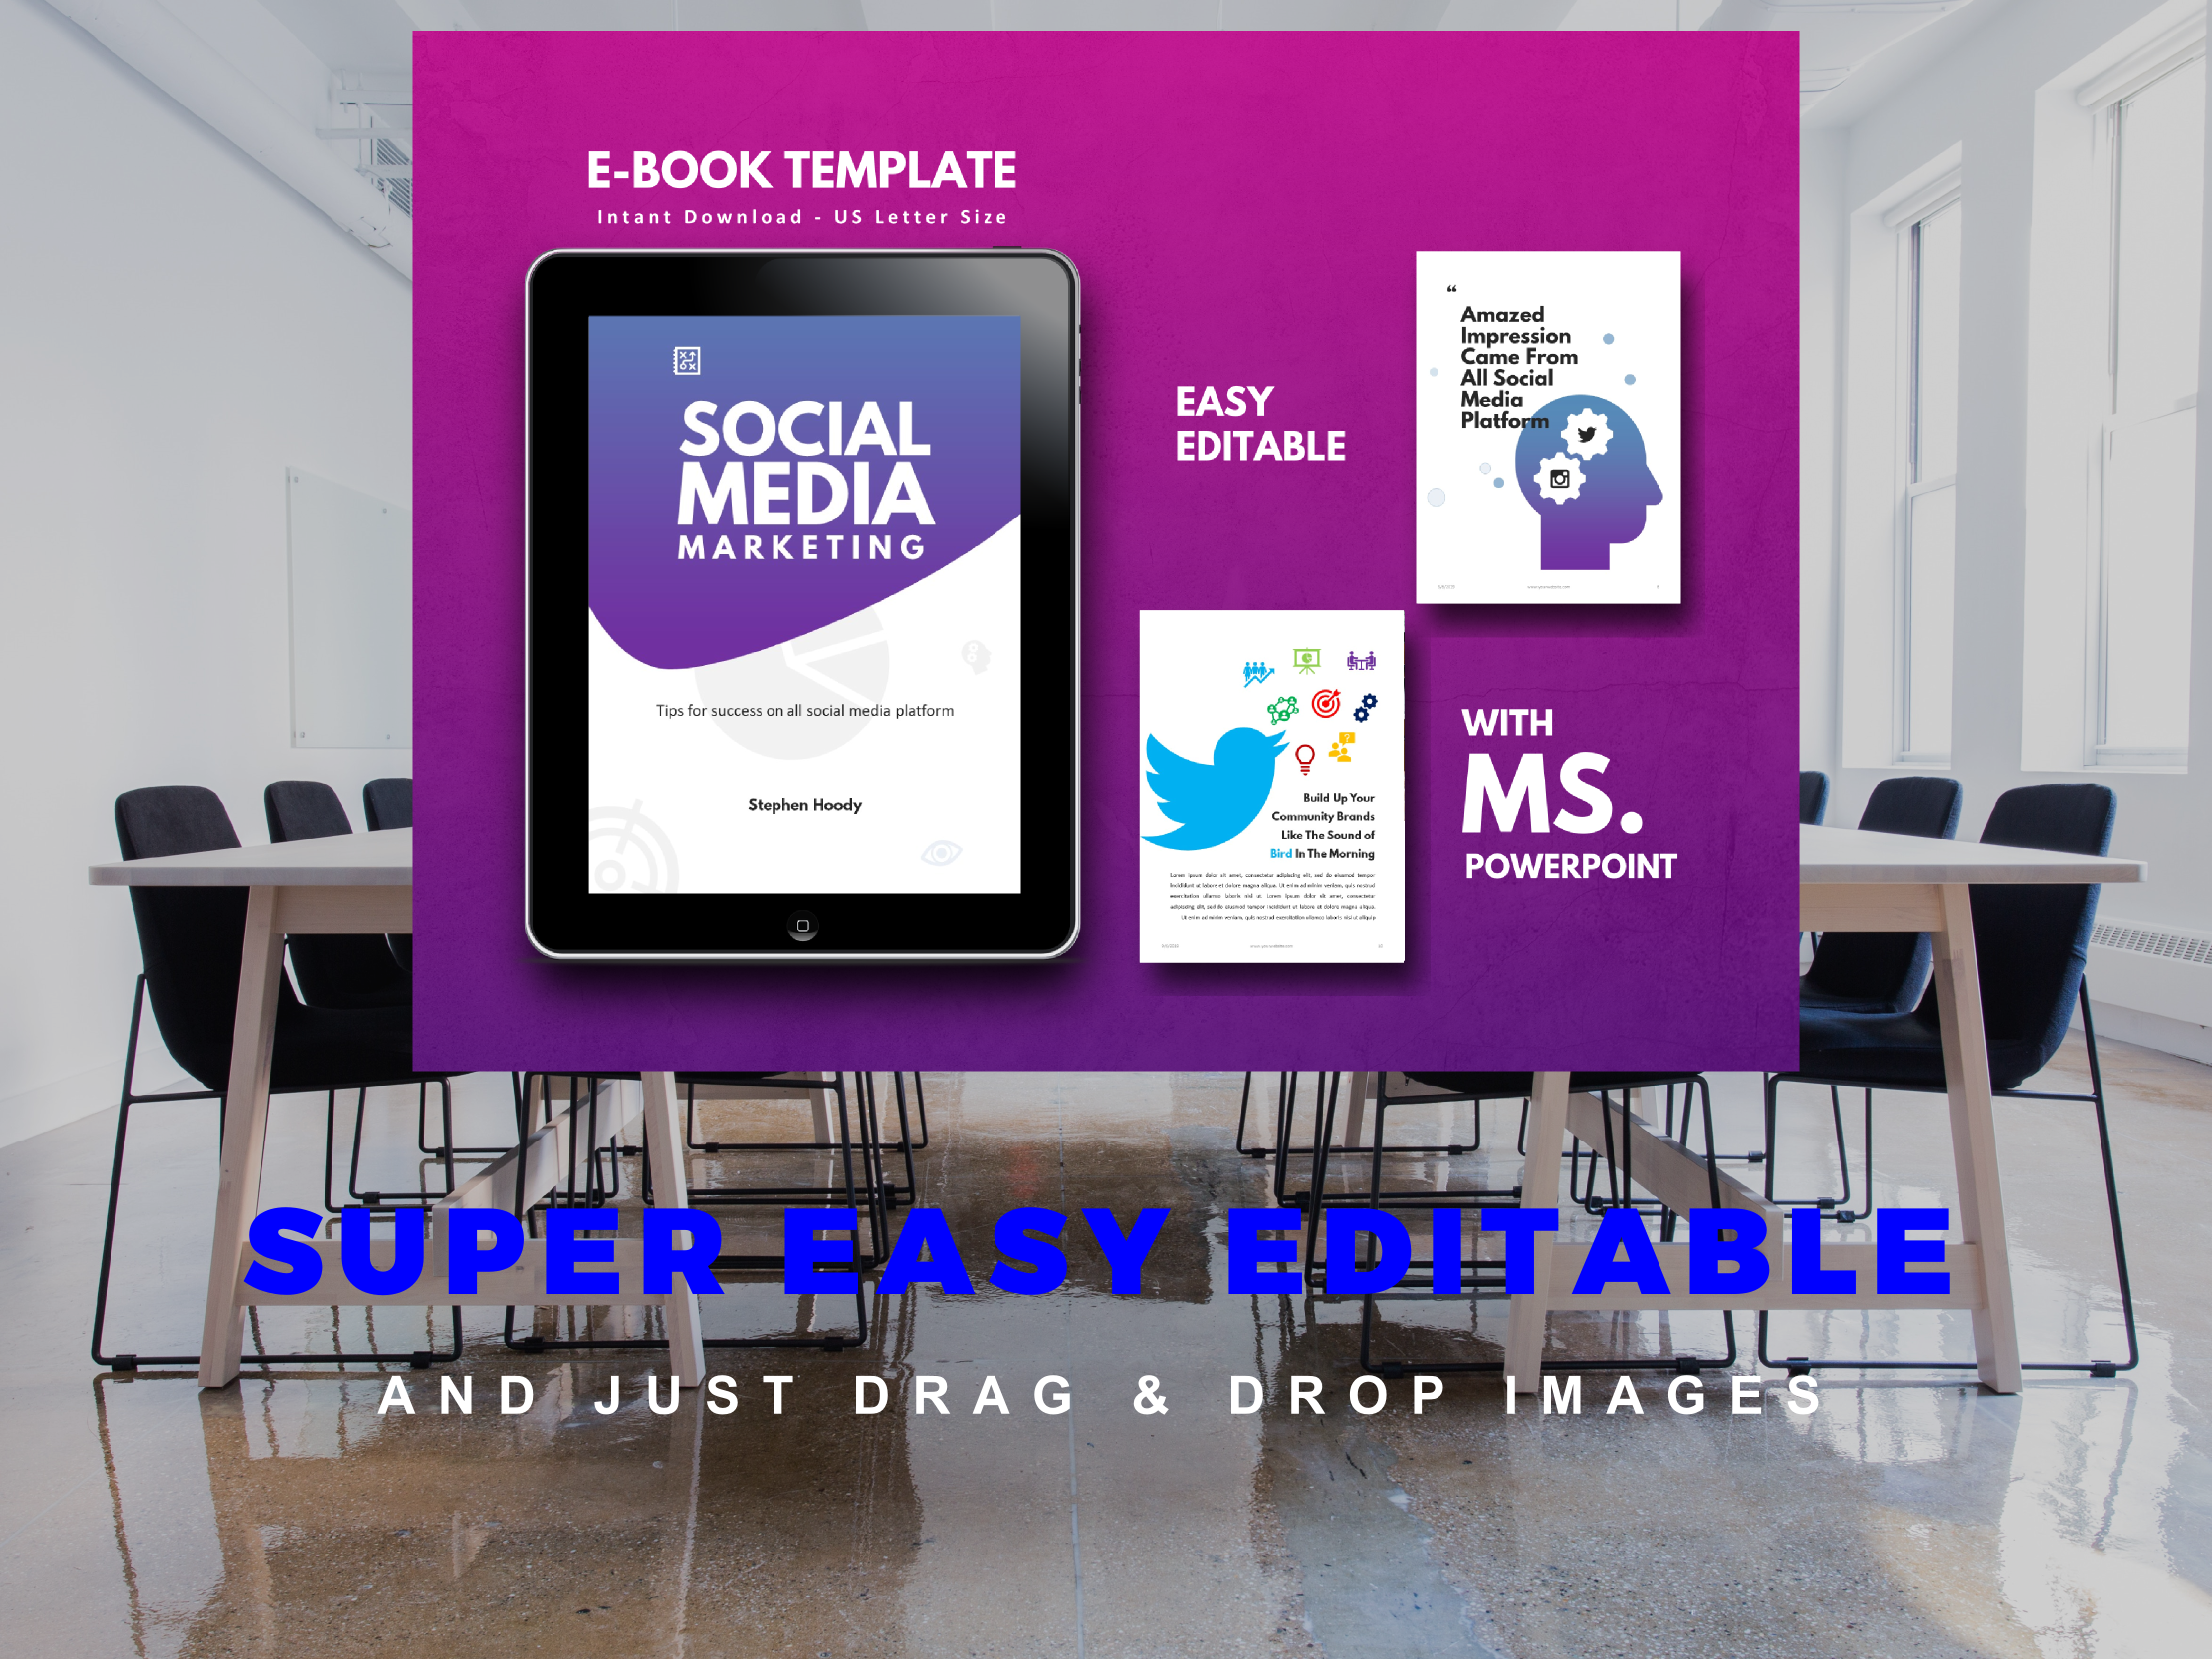 Social Media Marketing eBook Template PowerPoint By rivatxfz